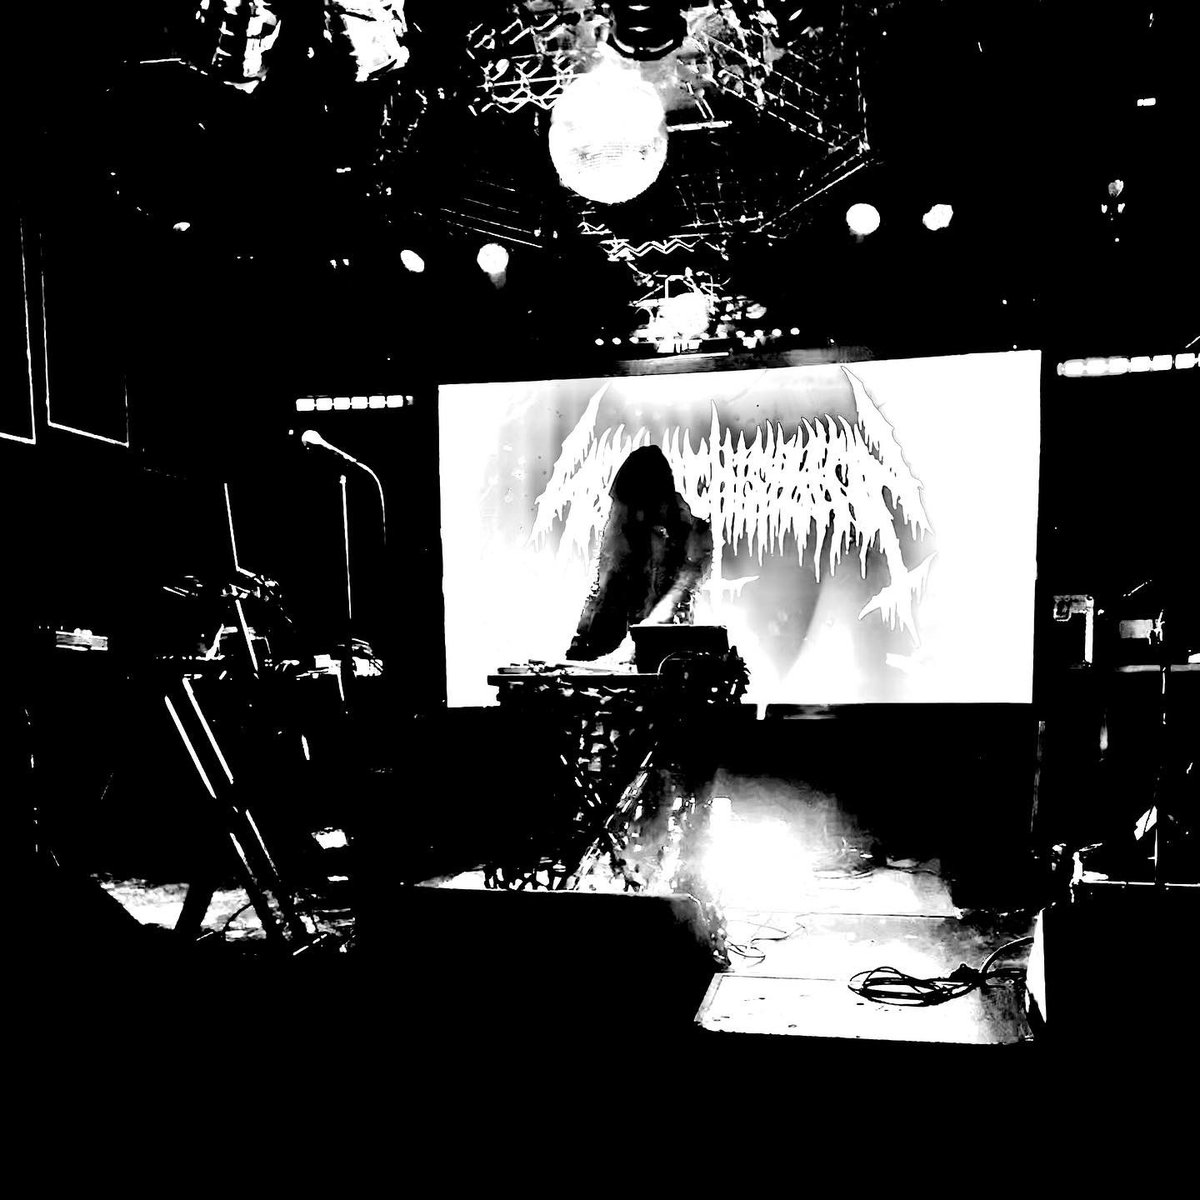 THIS SUNDAY 31-July see #SatanicHispanic, #DawnOfAshes, #MidnightNightmare, and #LOCKJAW at #LiarsClub #Chicago @S6T6NICHISP6NIC @dawnofashes666 @mNIGHTMAREband  @LIARSCLUBTWITS #witchhouse #witchhousemusic #industrialmetal #blackmetal #deathmetal #deathcore #horror #metal #EMB